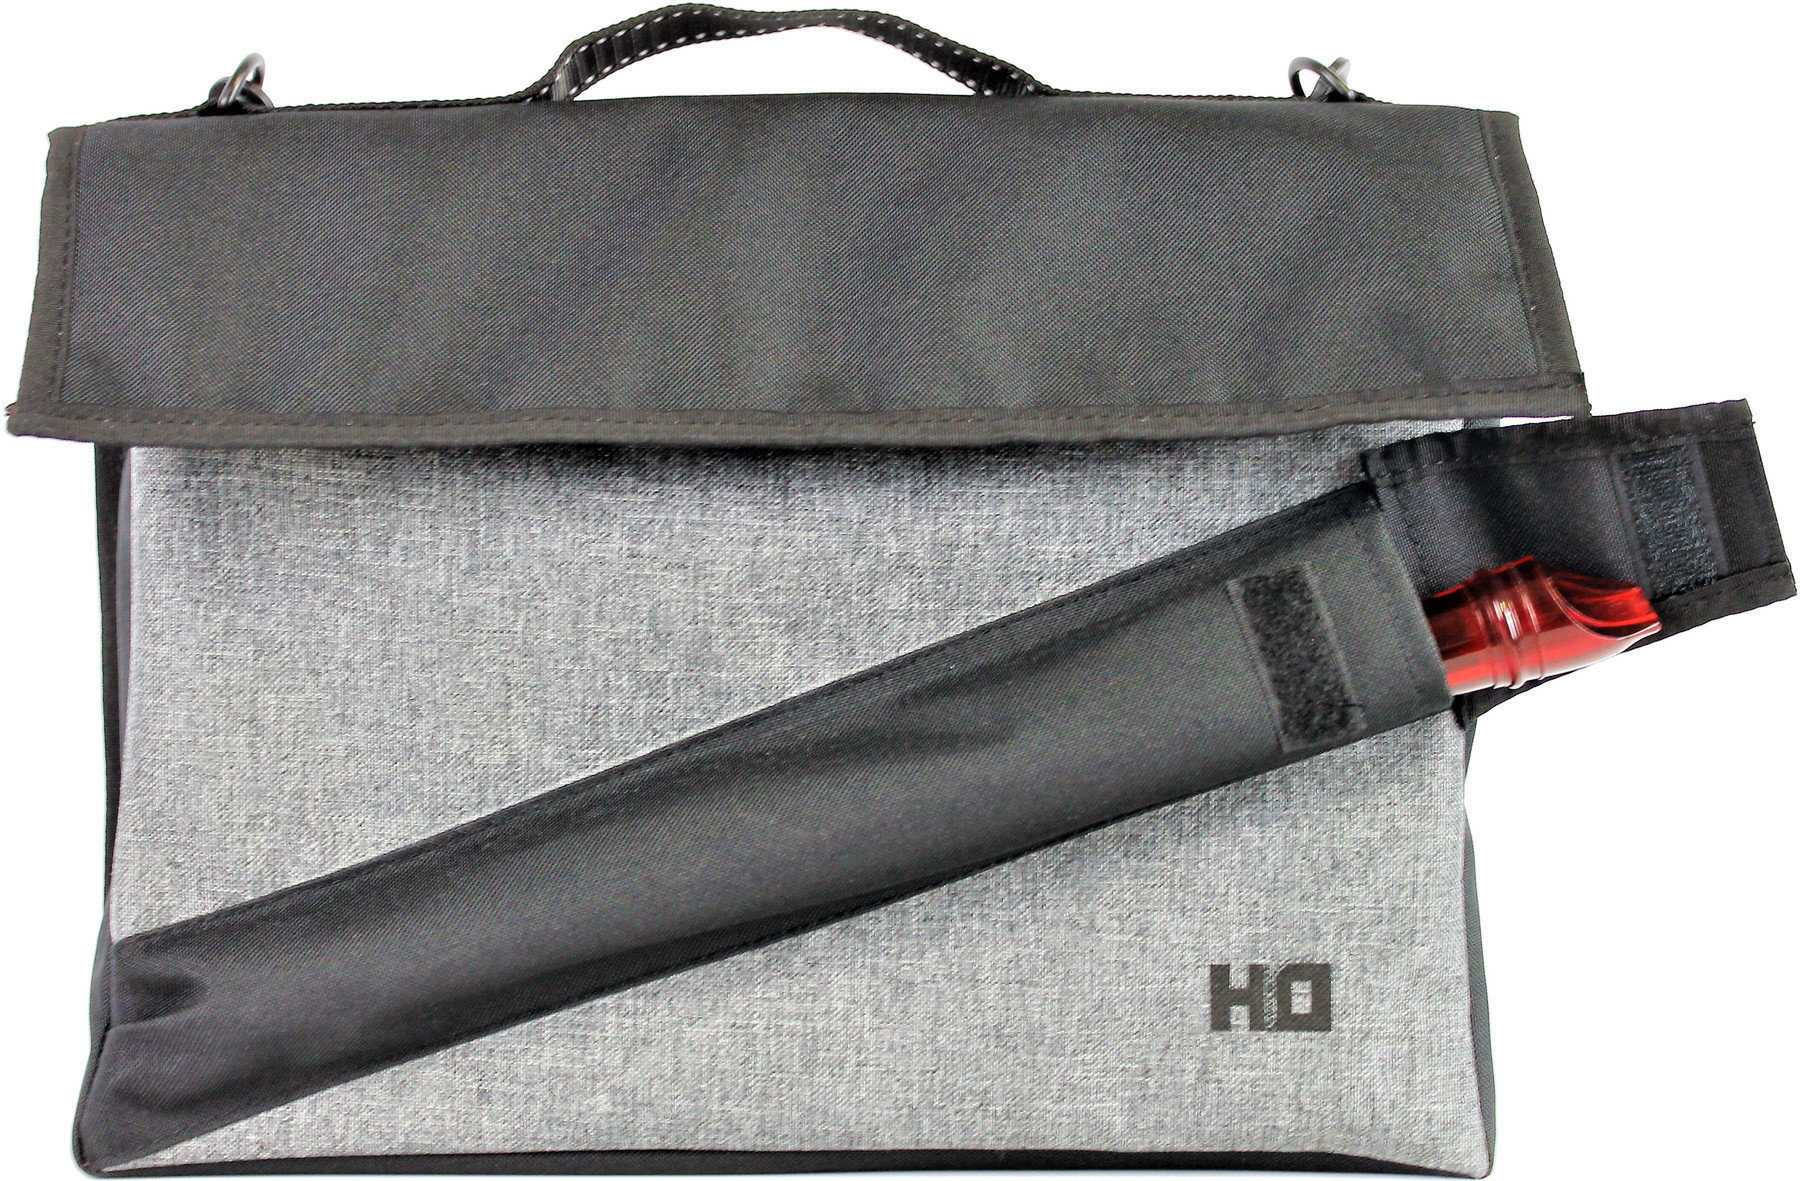 Messenger Bag Hudební Obaly H-O Flautino Grey-Black